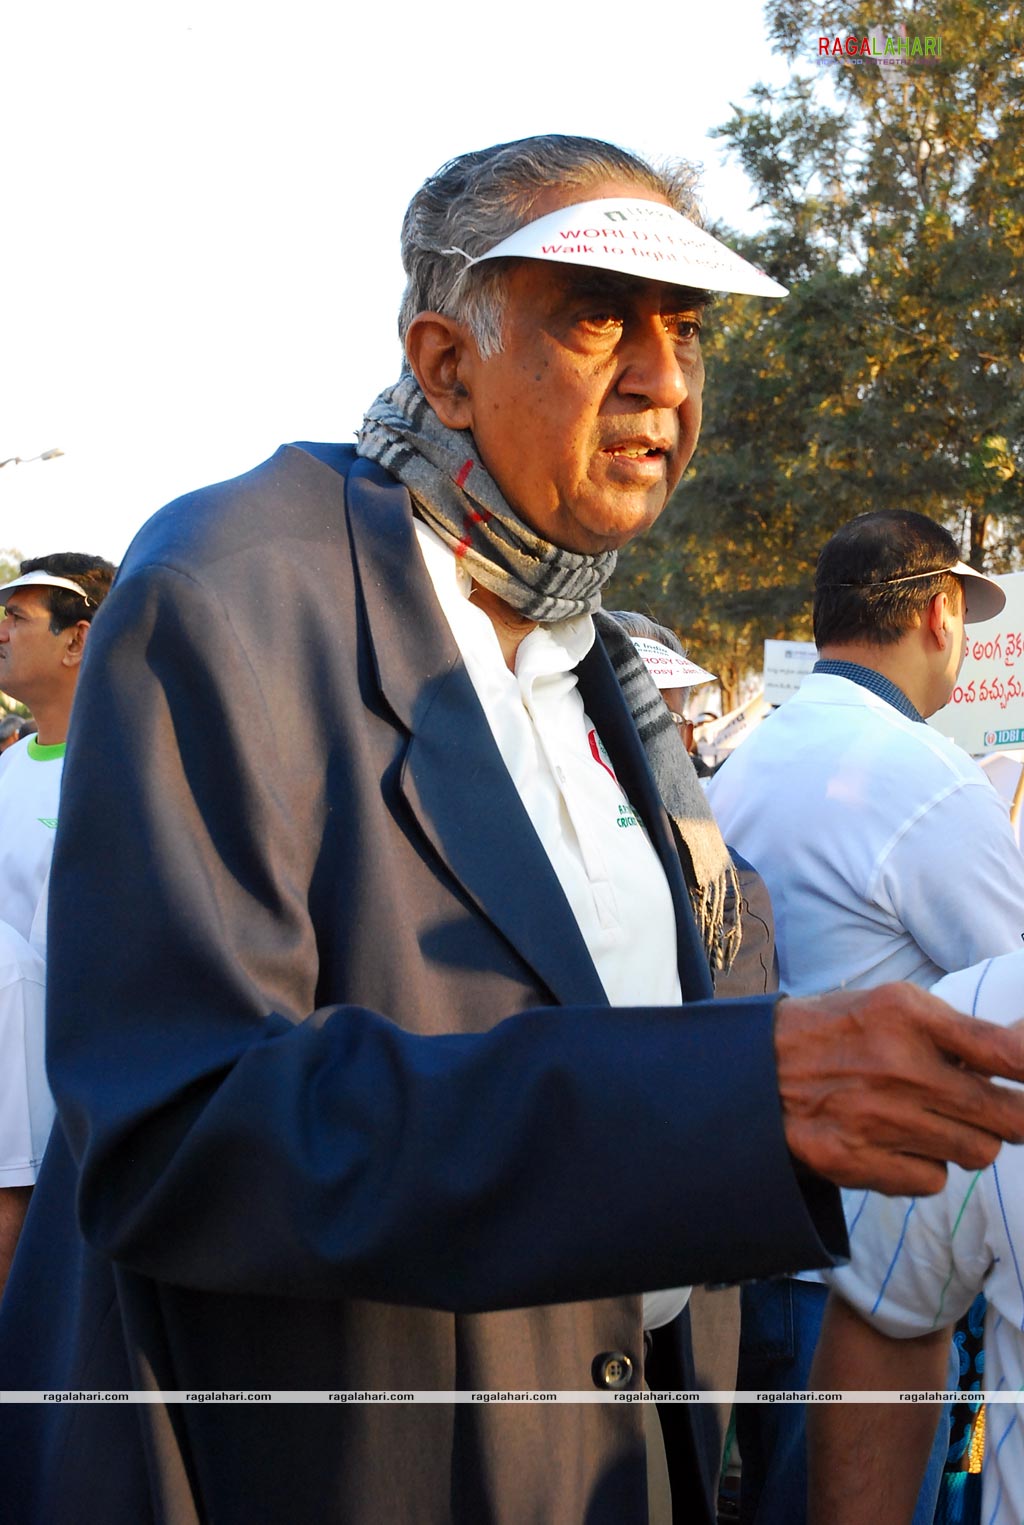 Leader Rana Walks to Fight Leprosy on World Leprosy Day